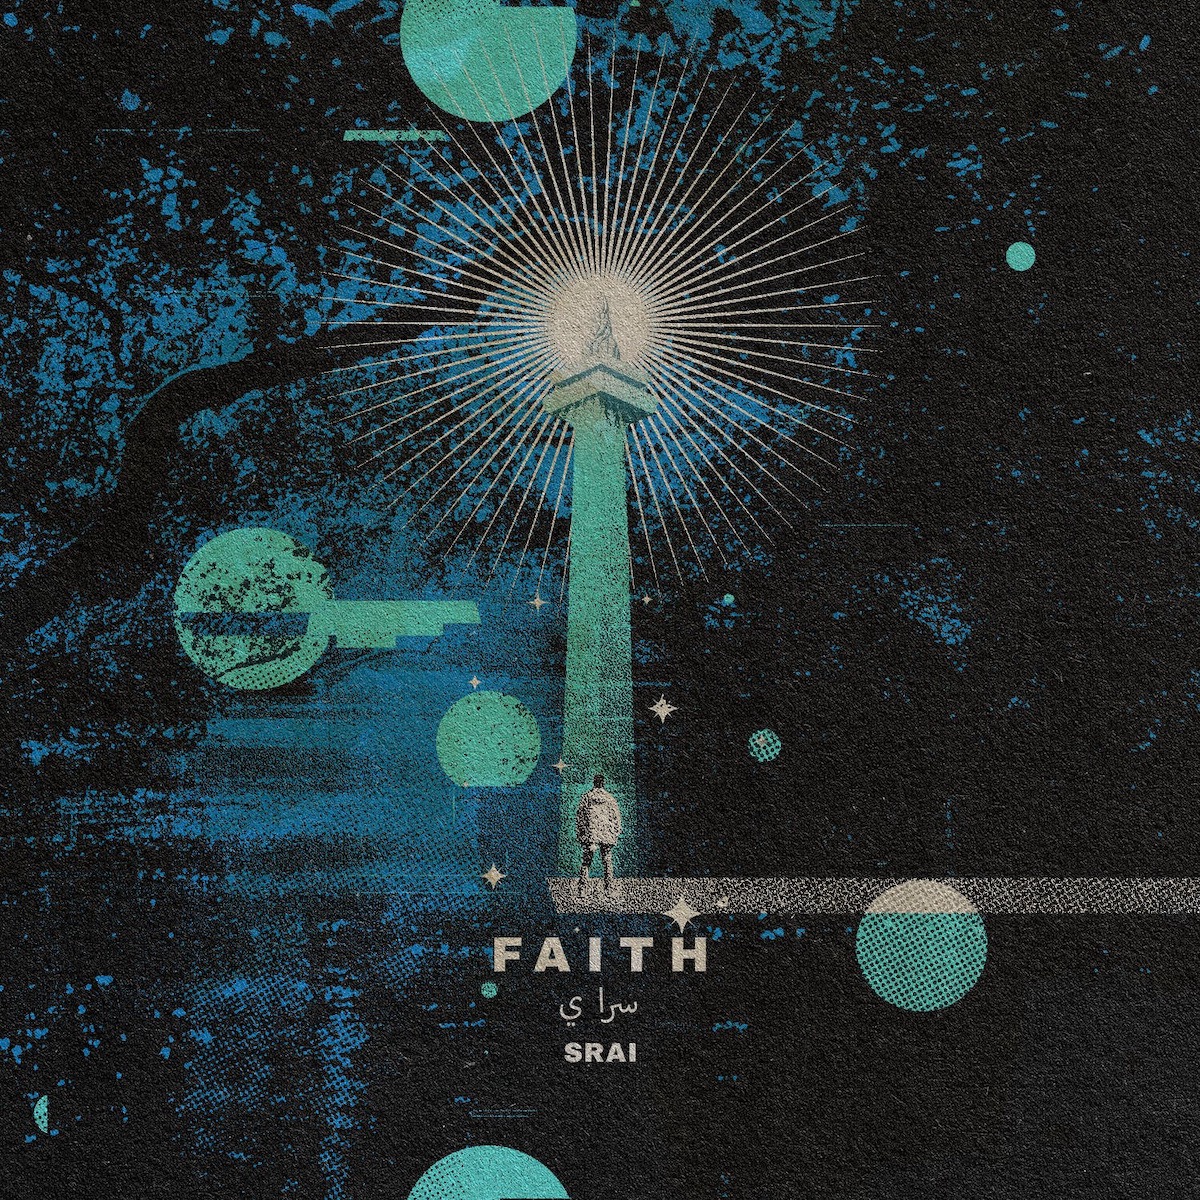 LISTEN: “Faith” by Srai